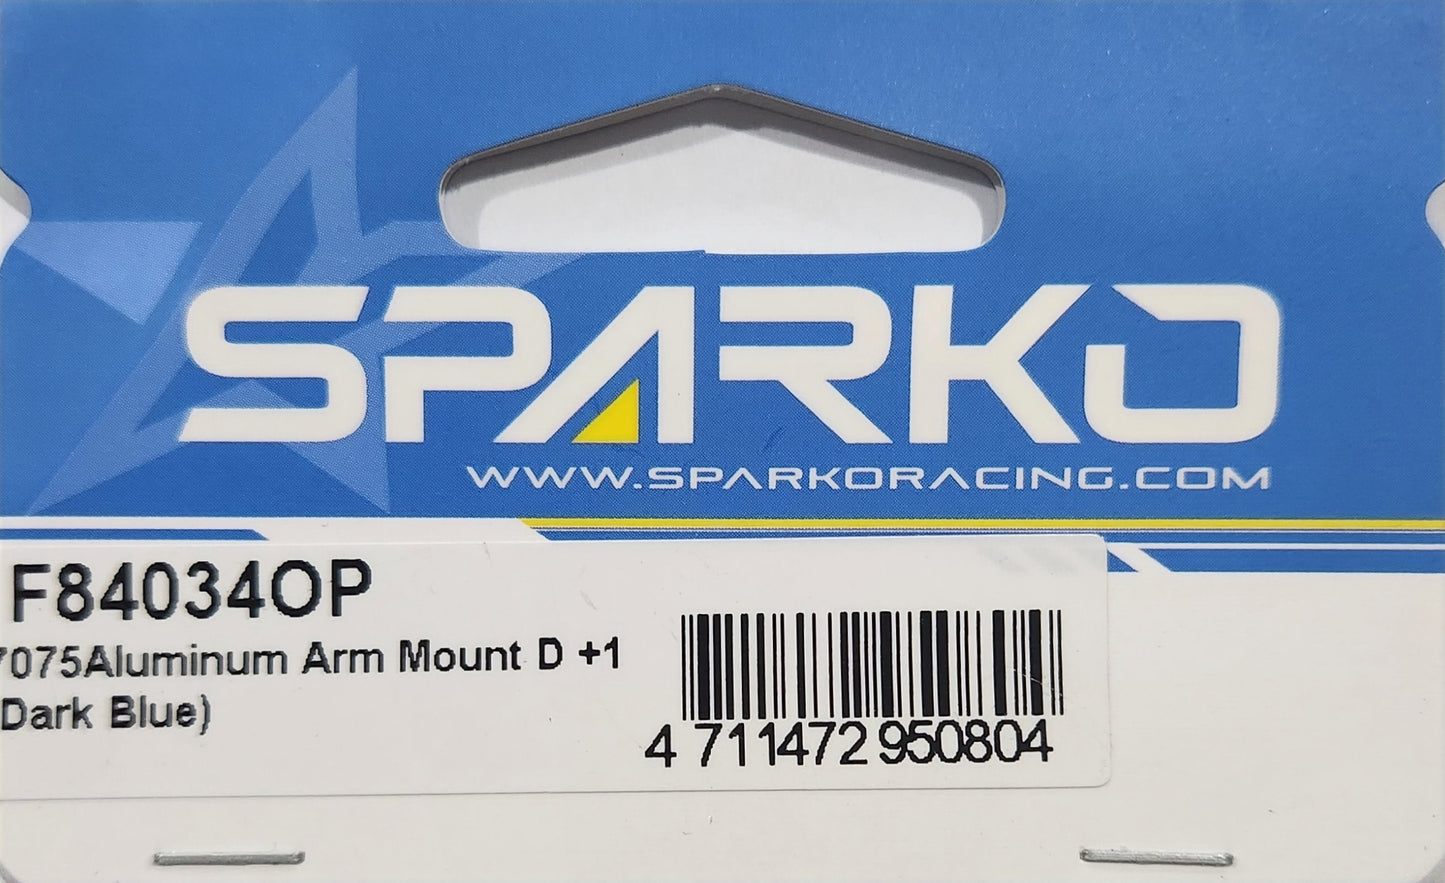 Sparko Racing 7075 Aluminium Arm Mount D +1 (Dark Blue)